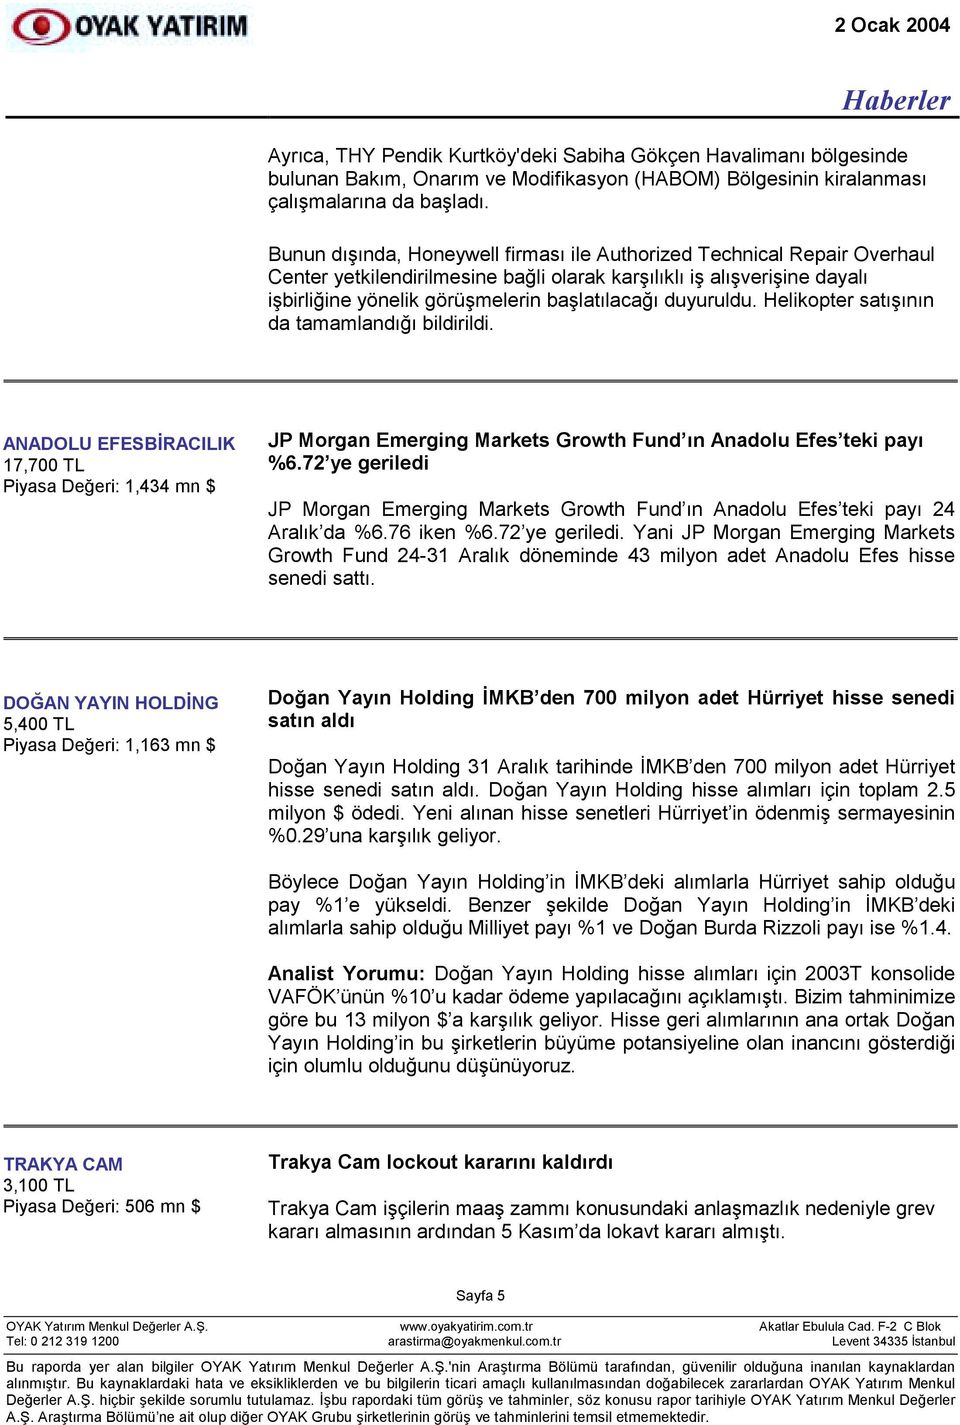 duyuruldu. Helikopter satõşõnõn da tamamlandõğõ bildirildi. ANADOLU EFESBİRACILIK 17,700 TL Piyasa Değeri: 1,434 mn $ JP Morgan Emerging Markets Growth Fund õn Anadolu Efes teki payõ %6.